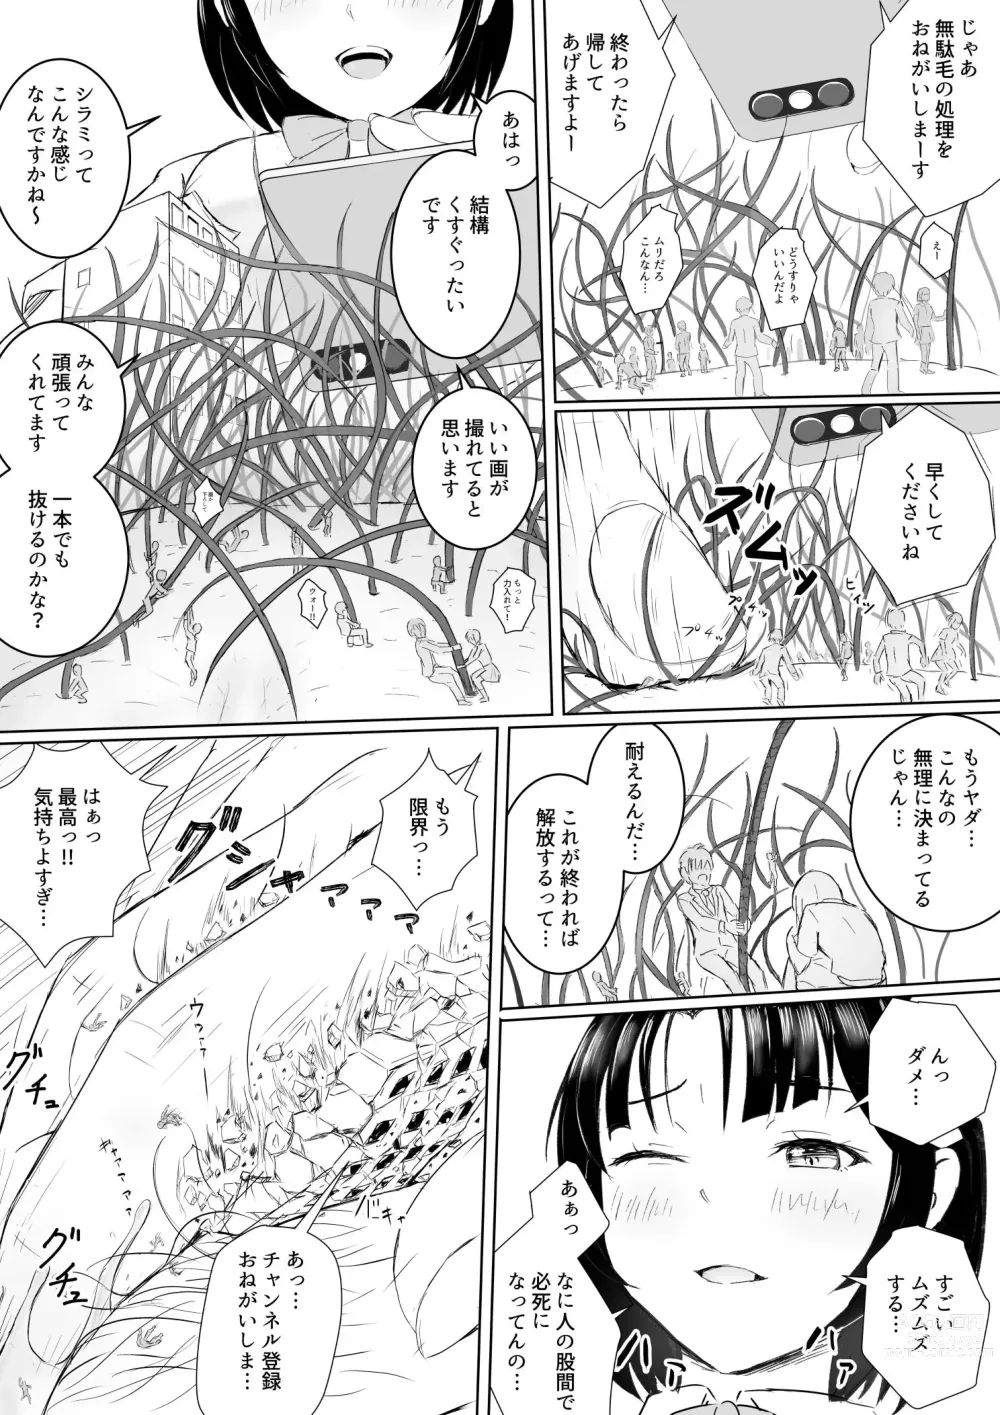 Page 3 of doujinshi Shukusho Haishin